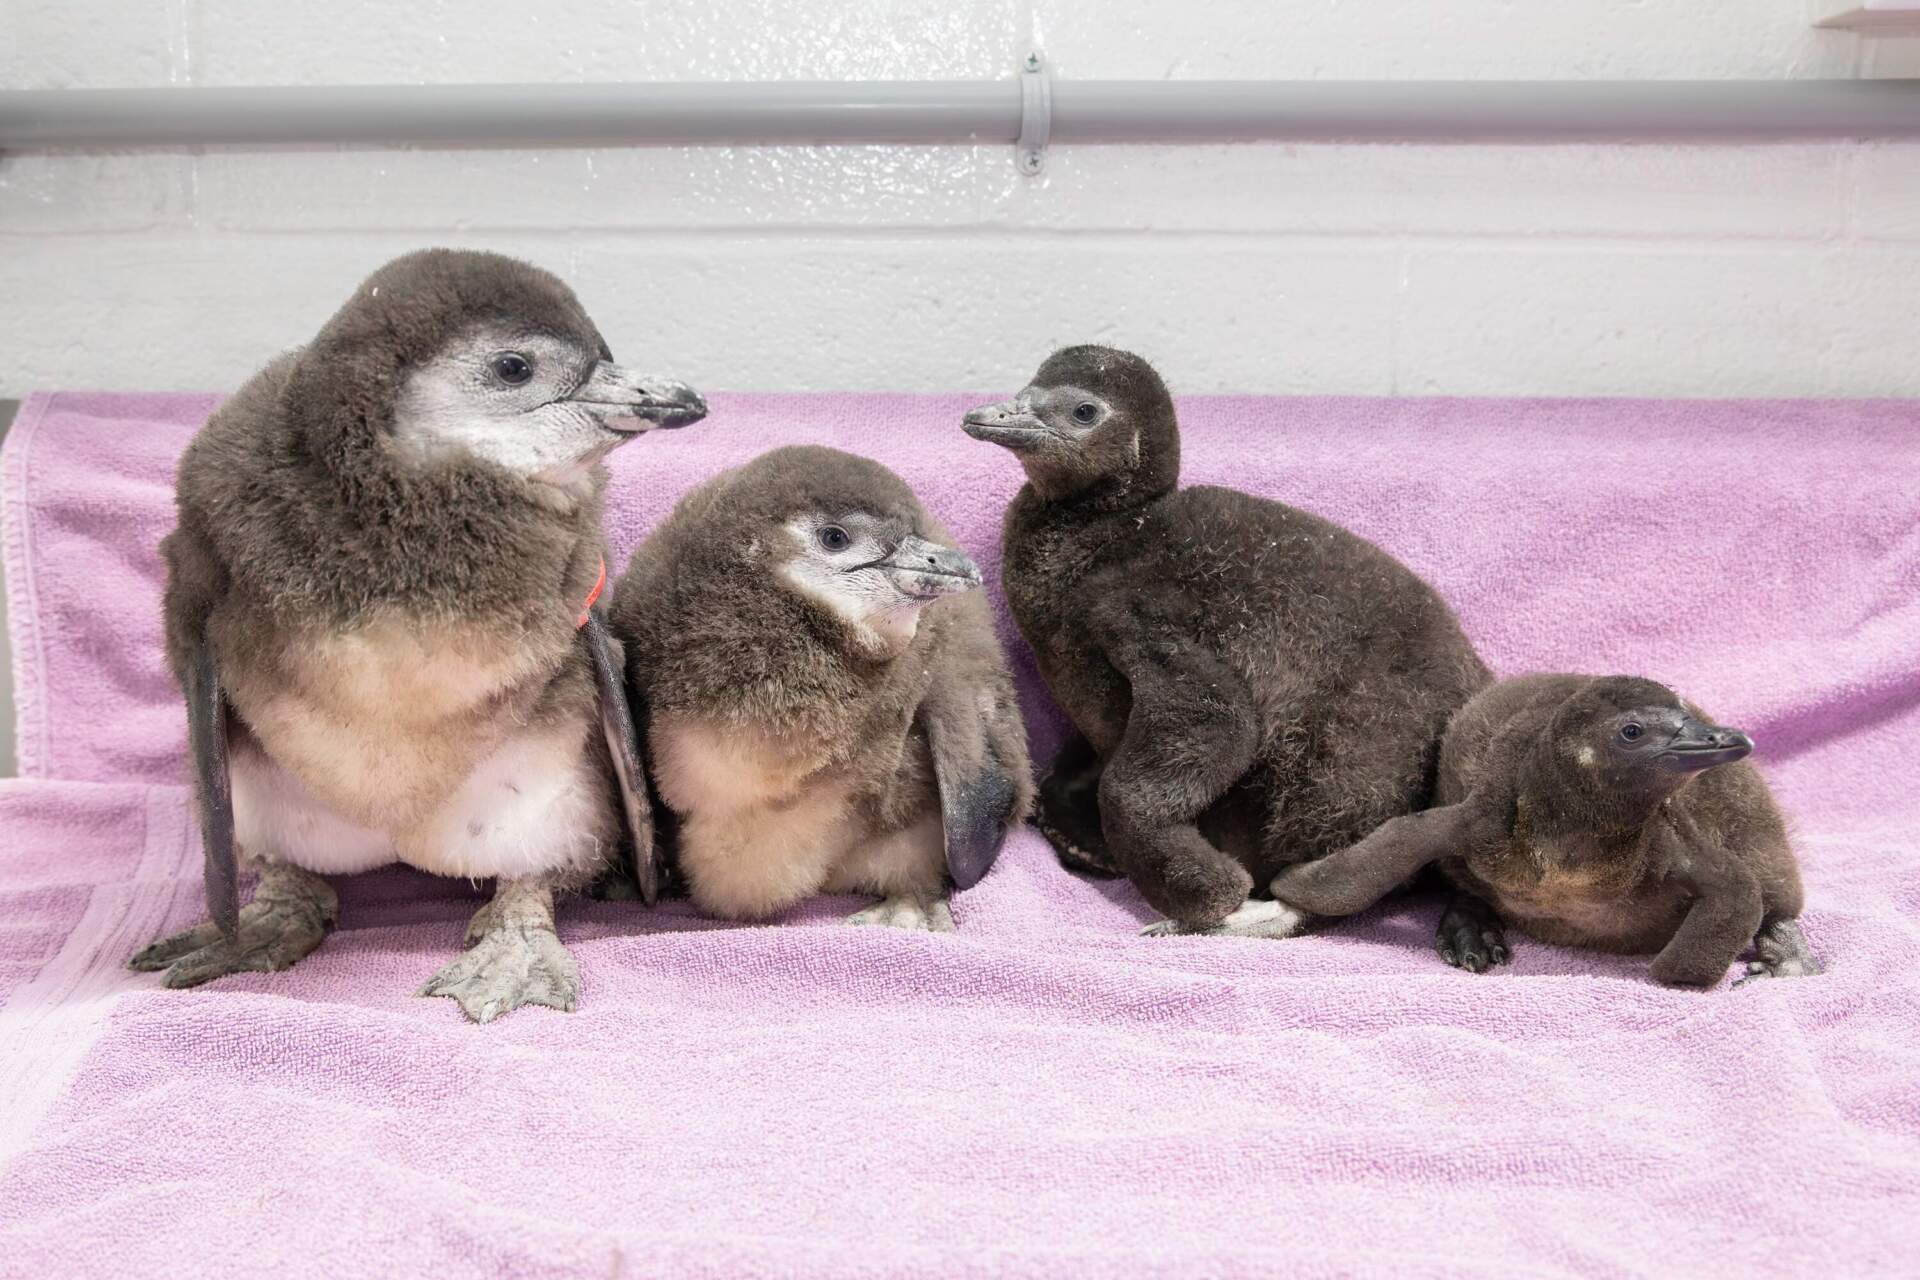 Four baby penguins sit together at the New England Aquarium (Photo courtesy New England Aquarium)